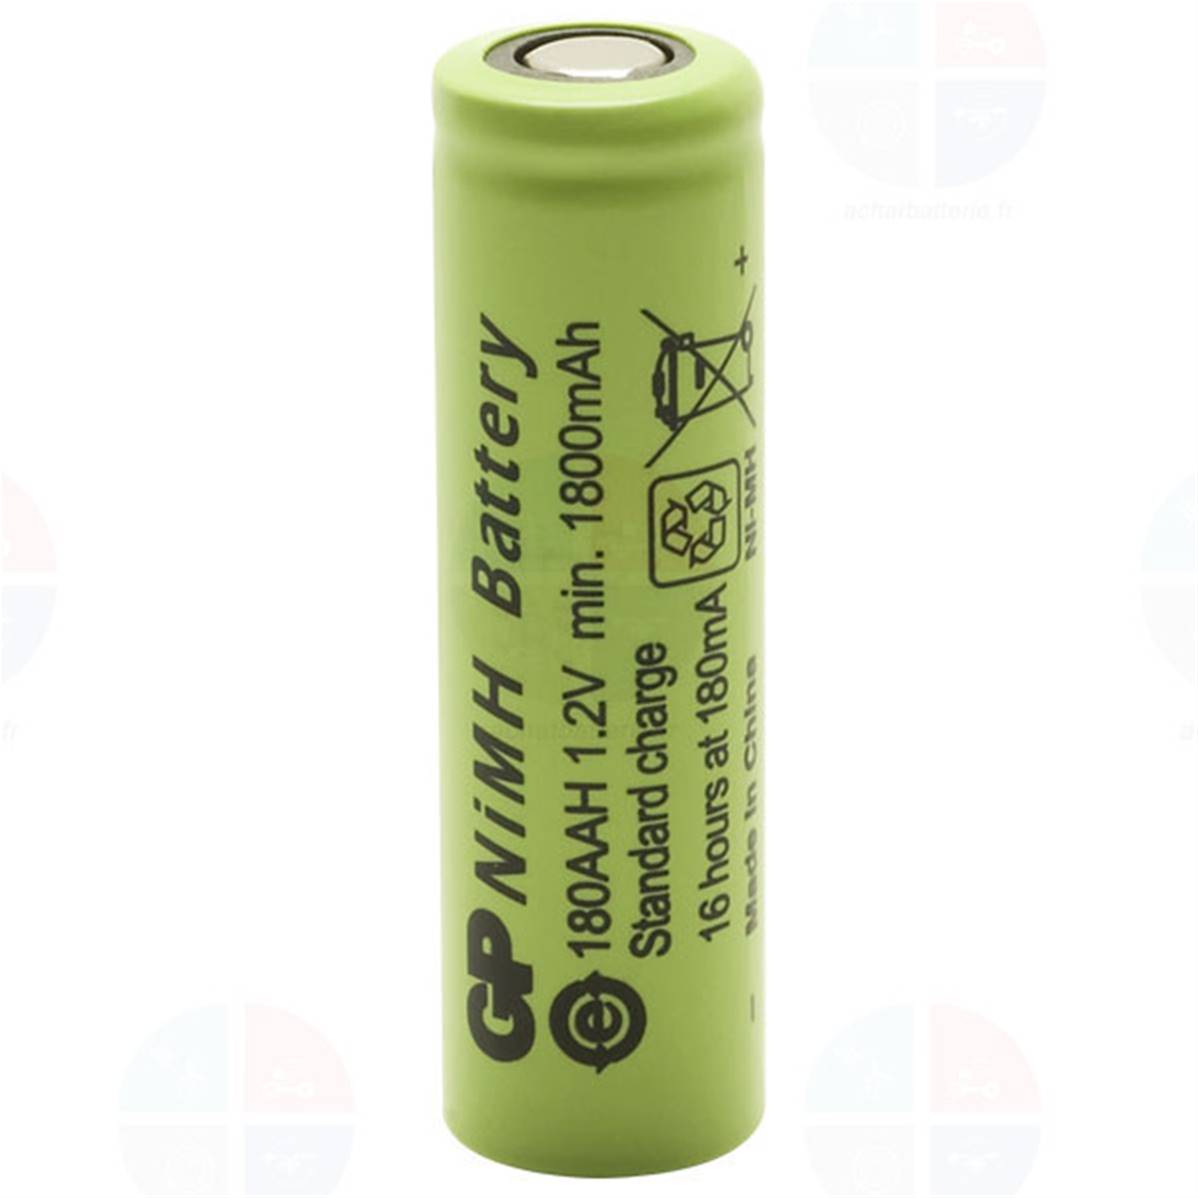 Accu nimh 1.2V 1.8ah AA 180AAH GP Battery - Achat Batterie